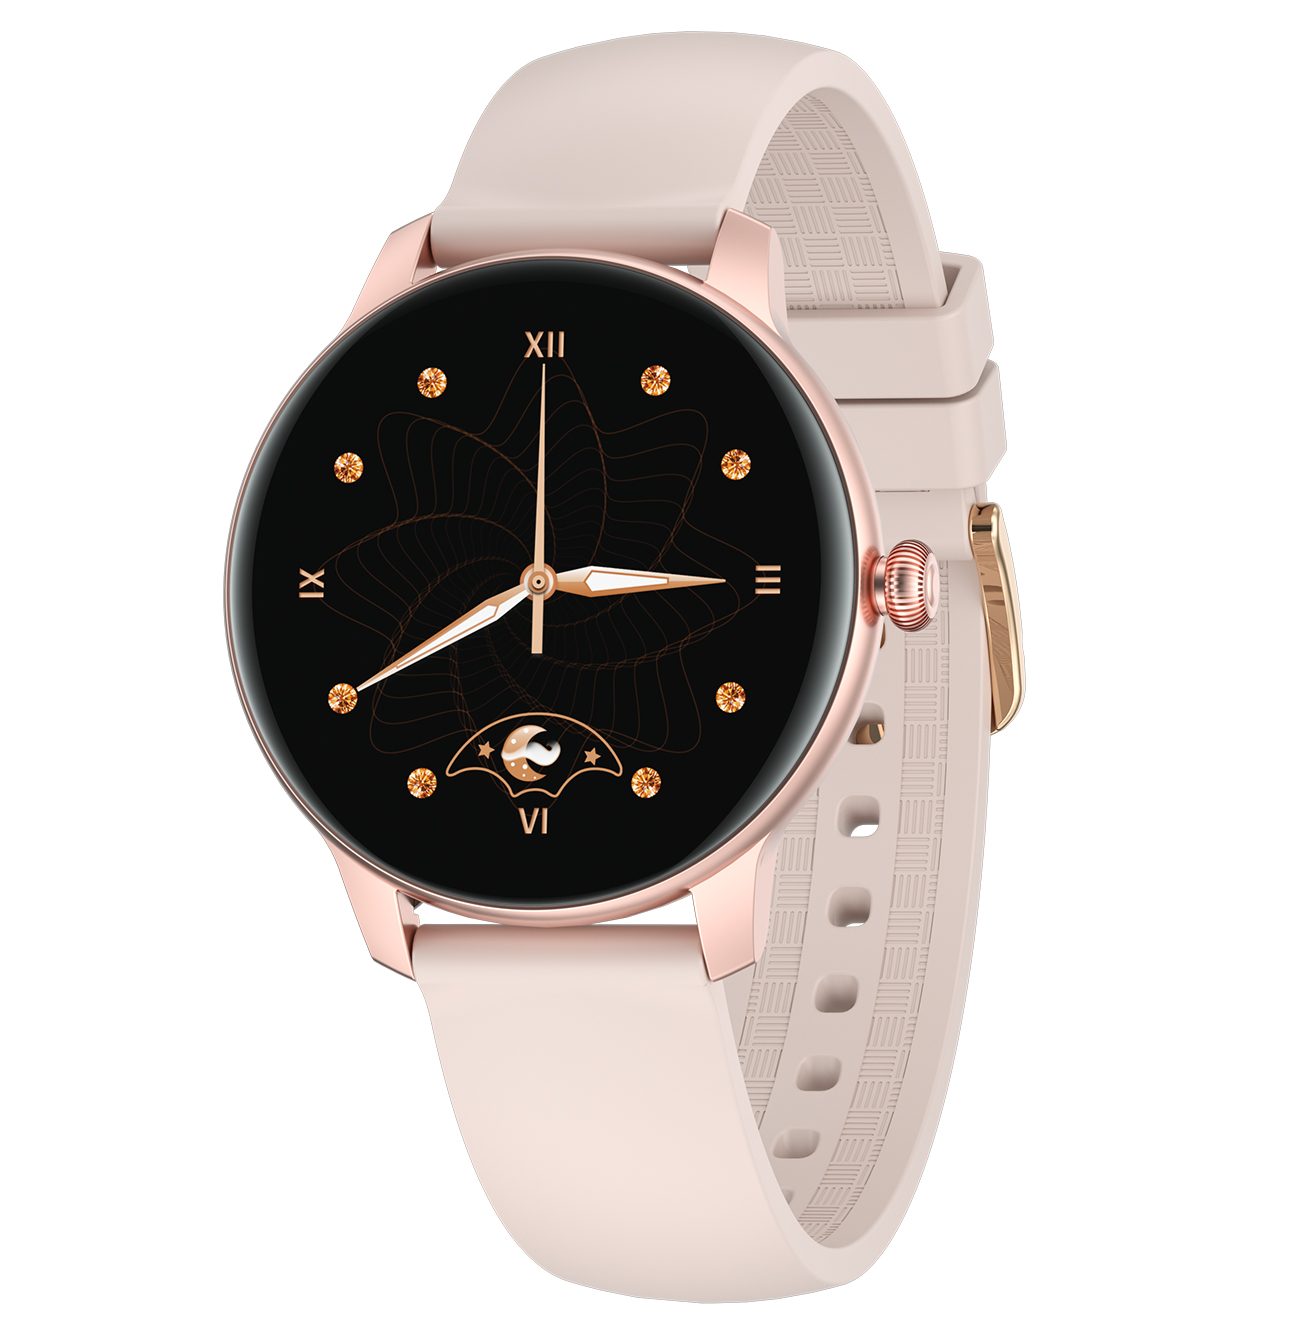 Cмарт-часы Smart Watch KW30